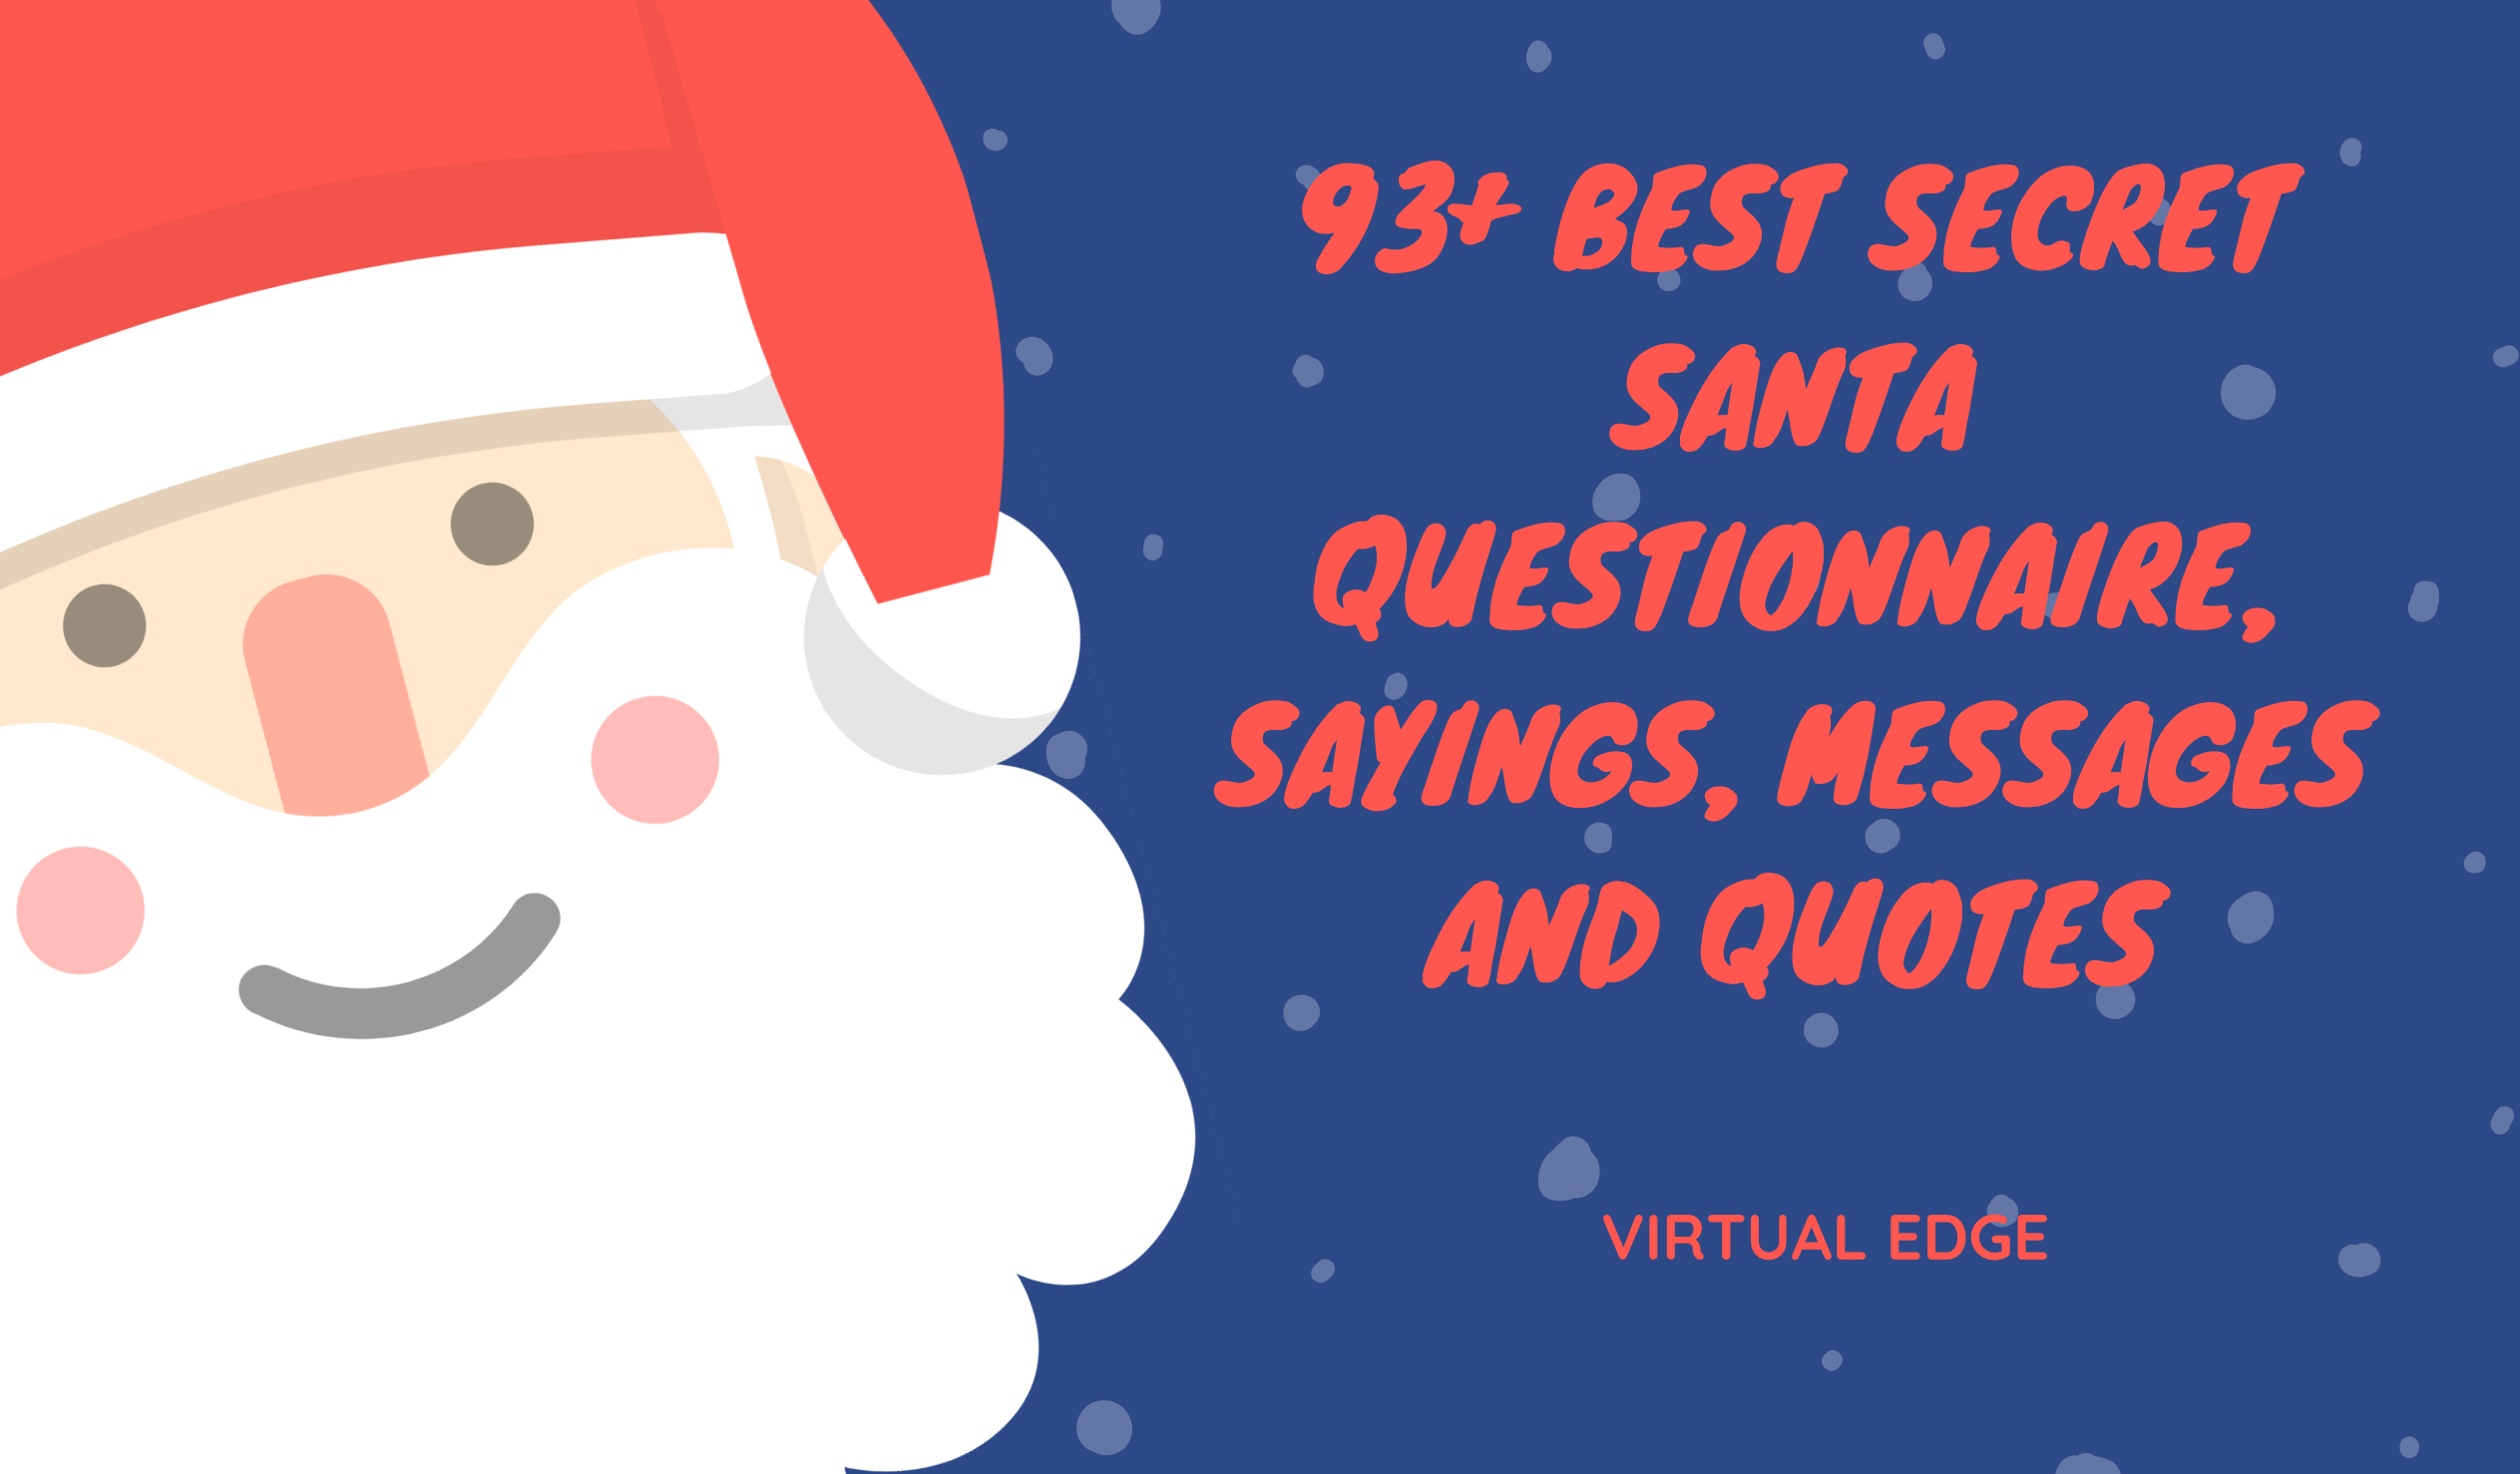 93+ Best Secret Santa Questionnaire, Sayings, Messages and Quotes